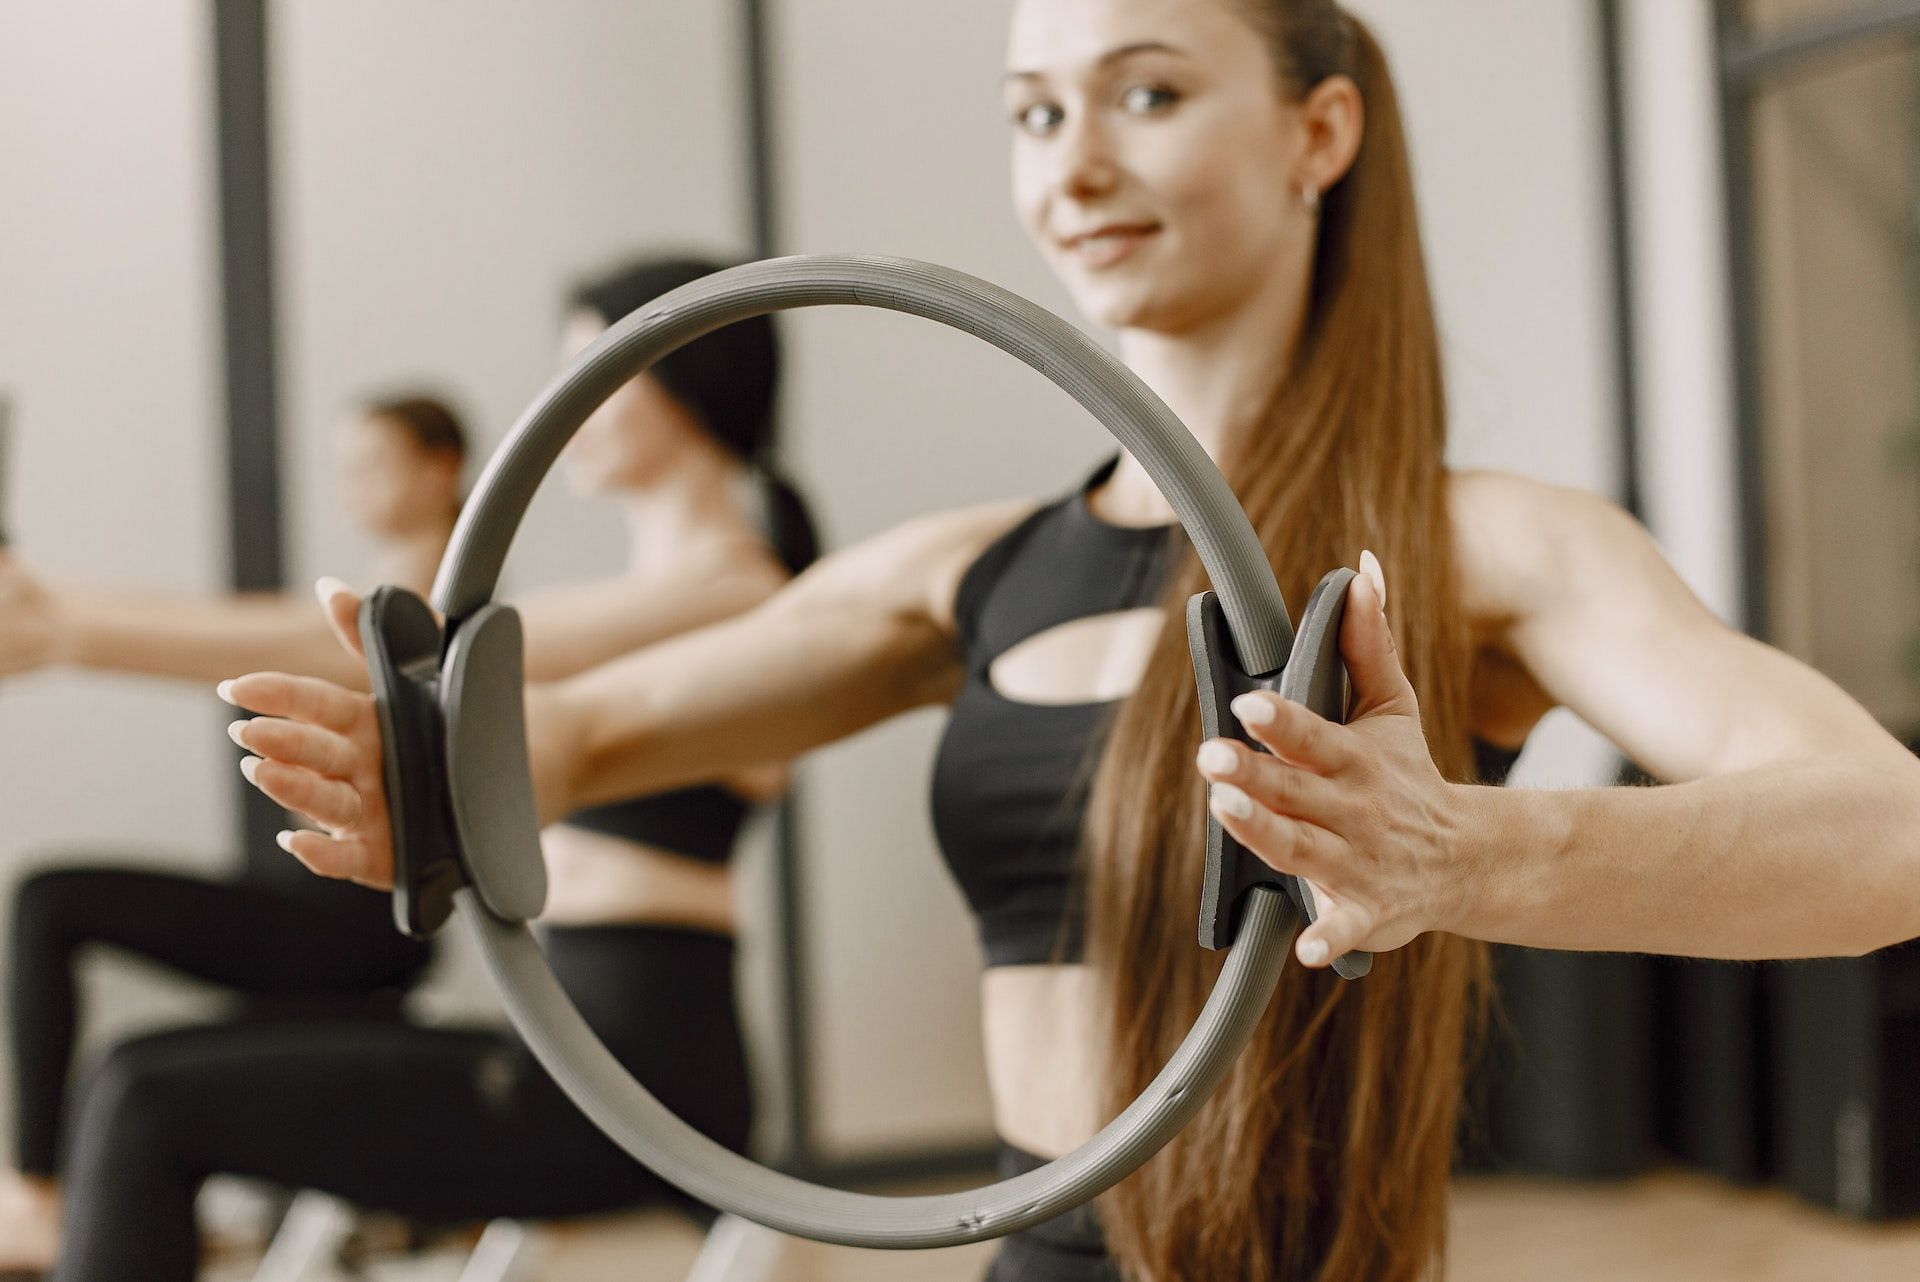 Pilates ring exercises offer full-body benefits. (Photo via Pexels/Gustavo Fring)